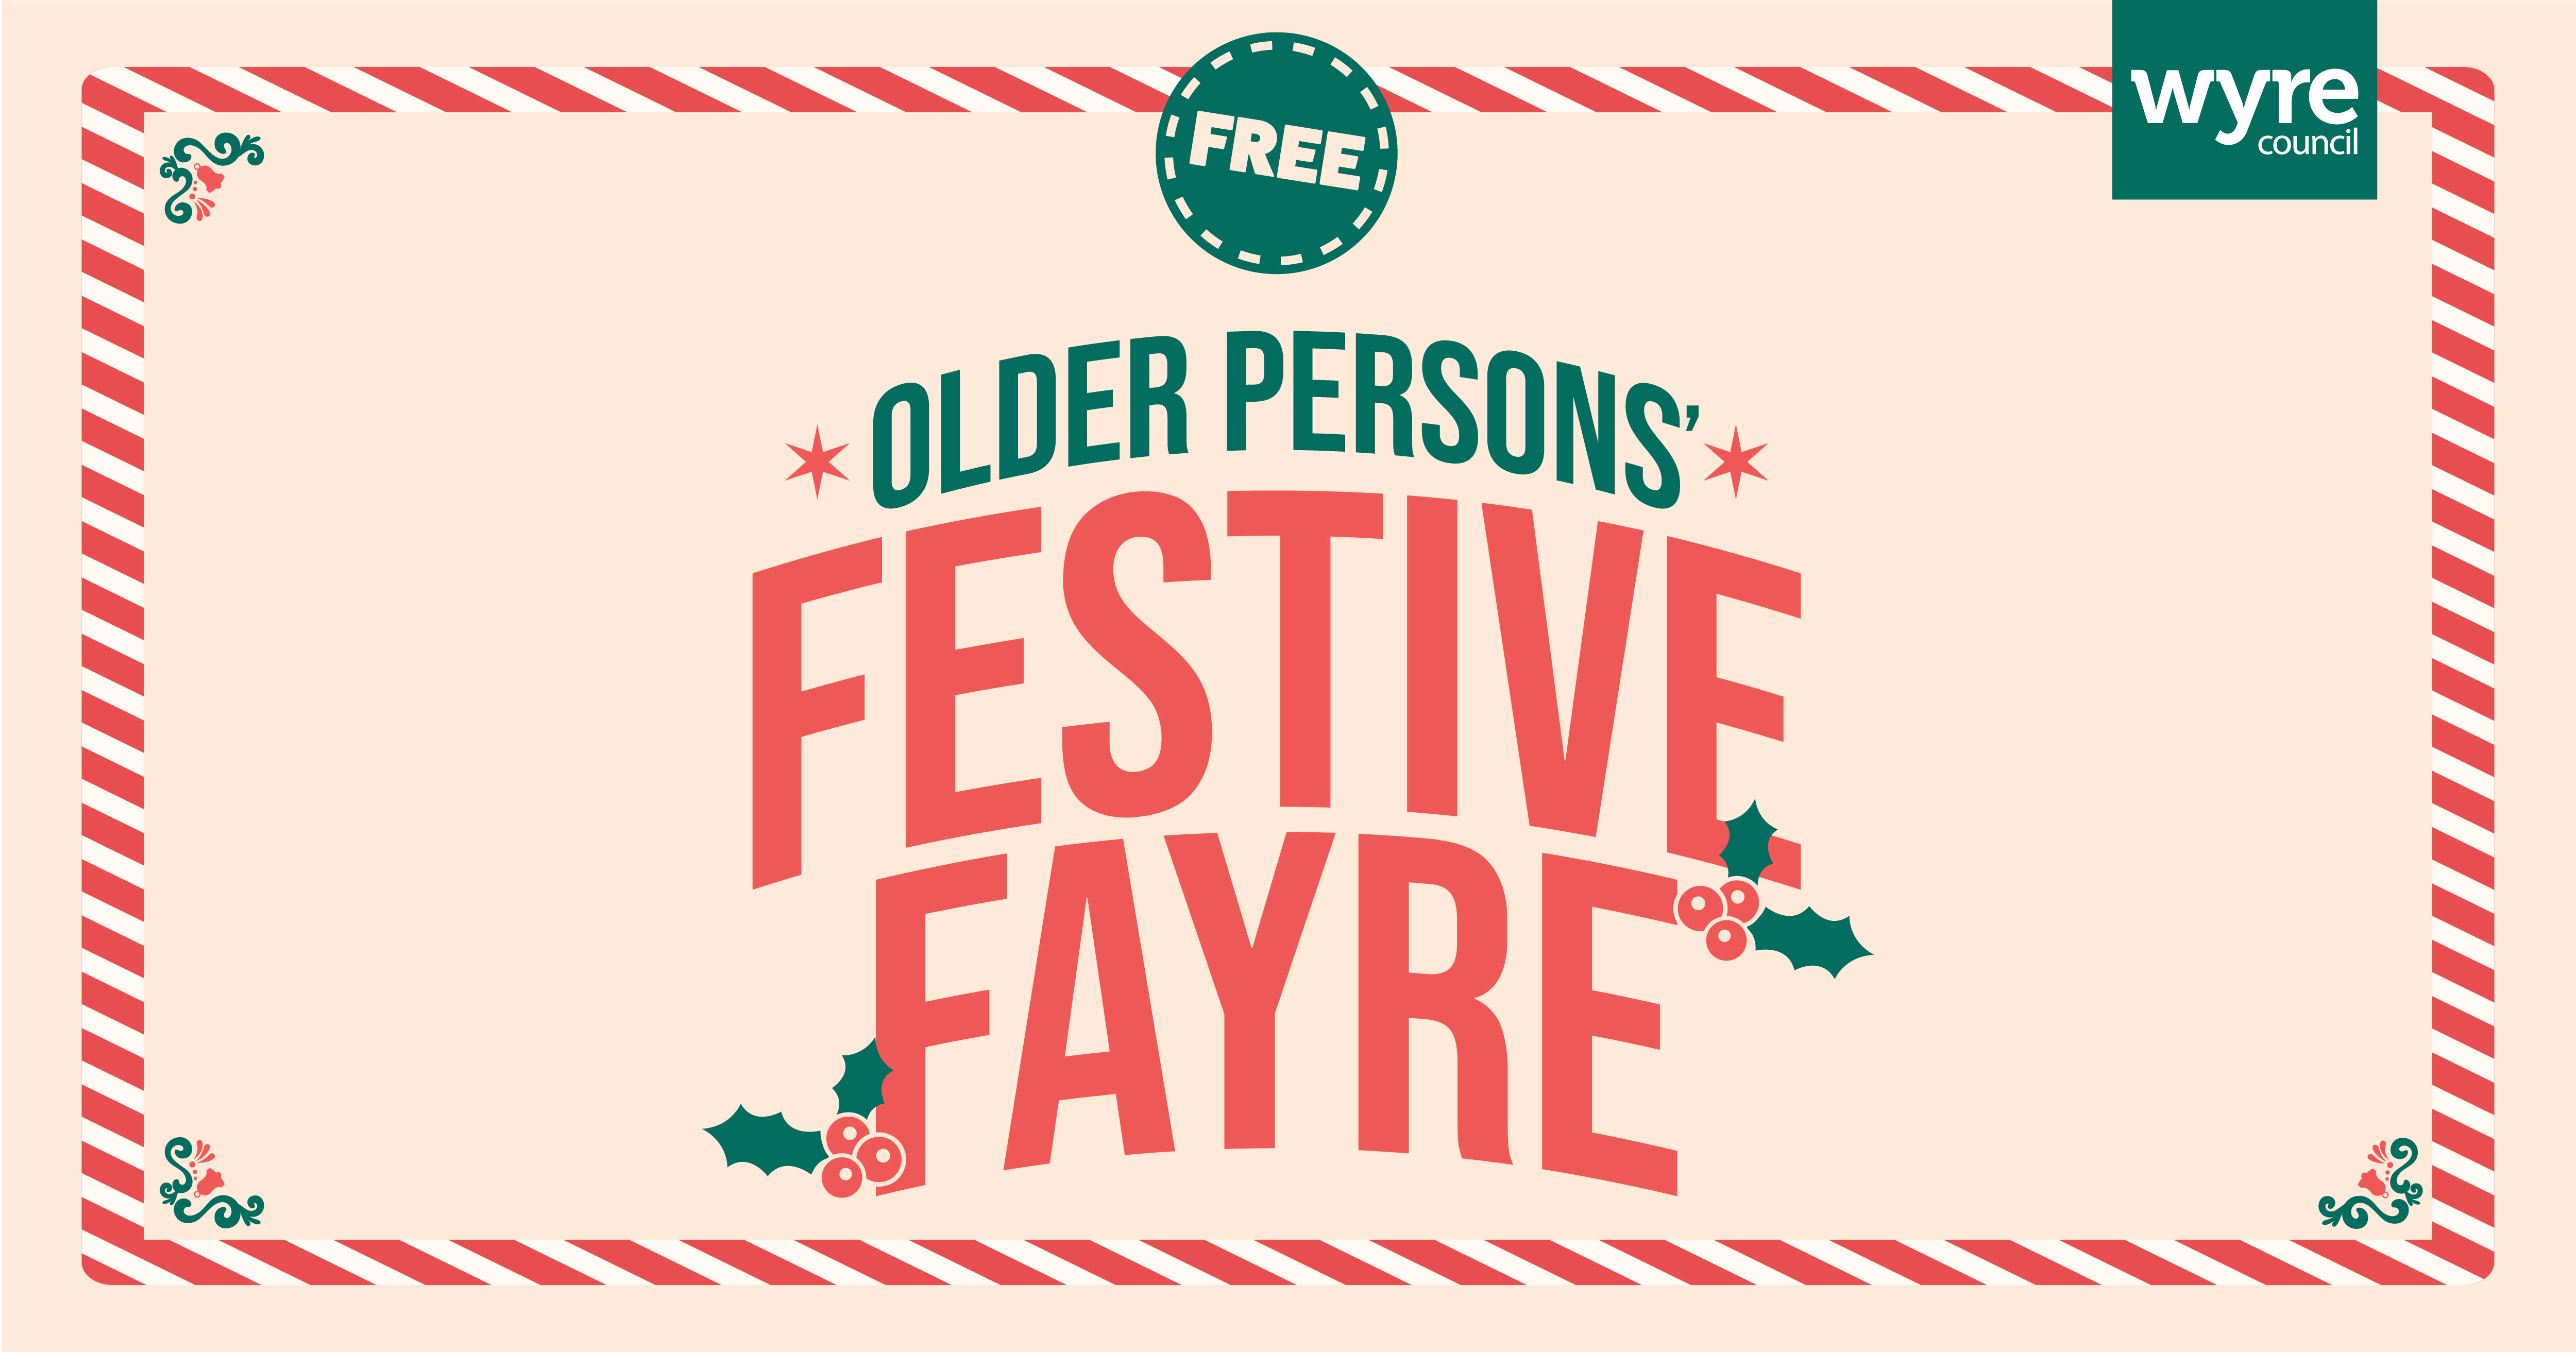 Older Persons festive fayre